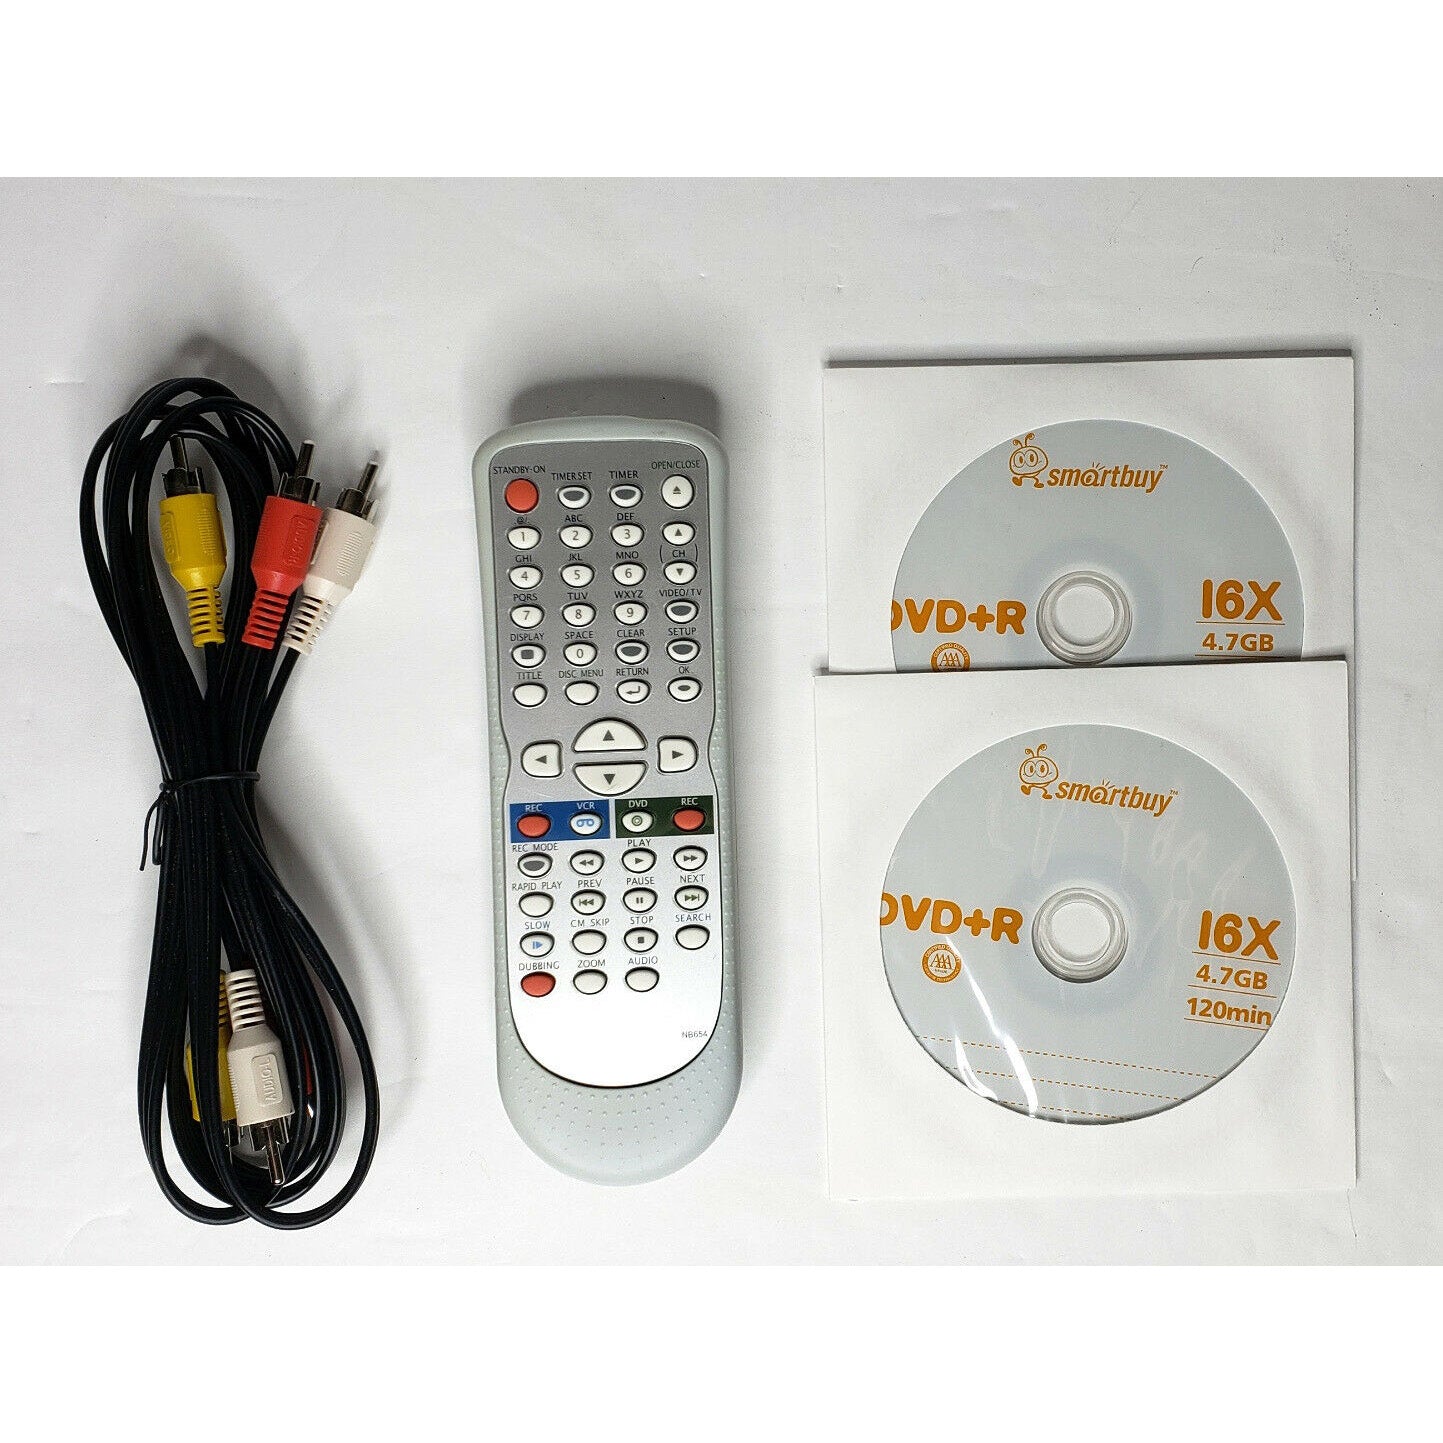 SV2000 WV20V6 VCR/DVD Recorder Combo - Remote Control and Accessories